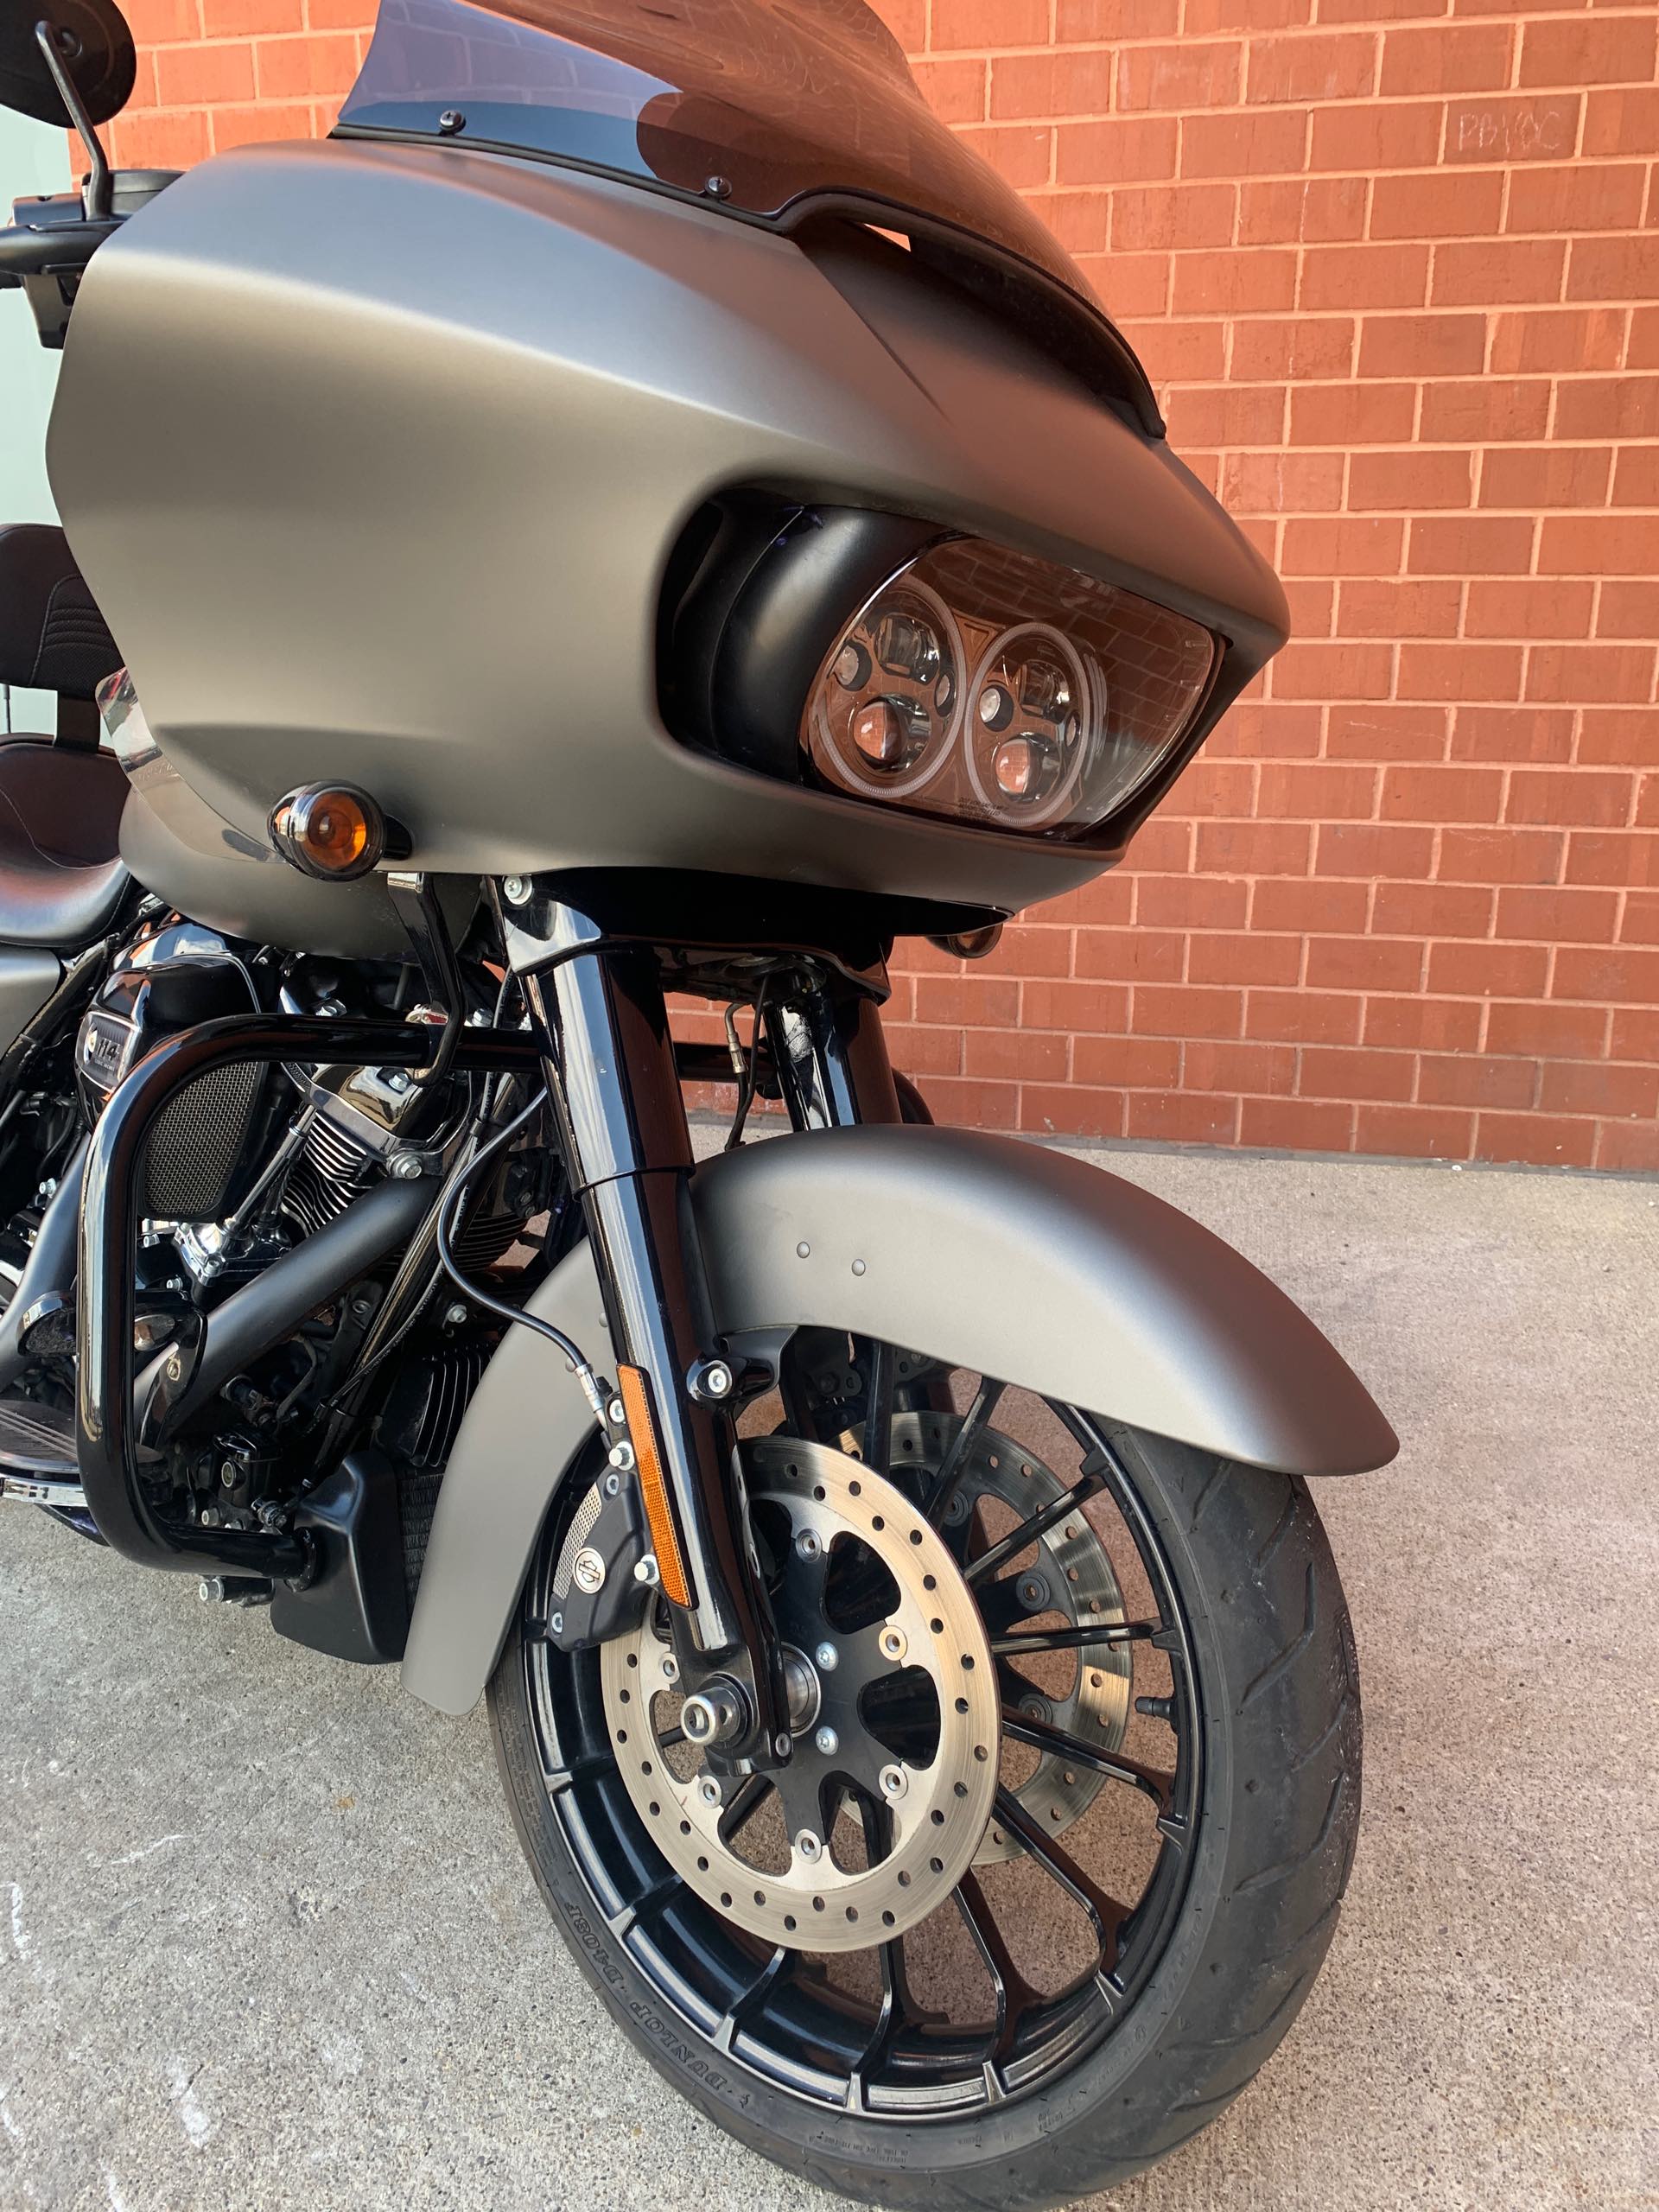 2019 Harley-Davidson Road Glide Special at Arsenal Harley-Davidson